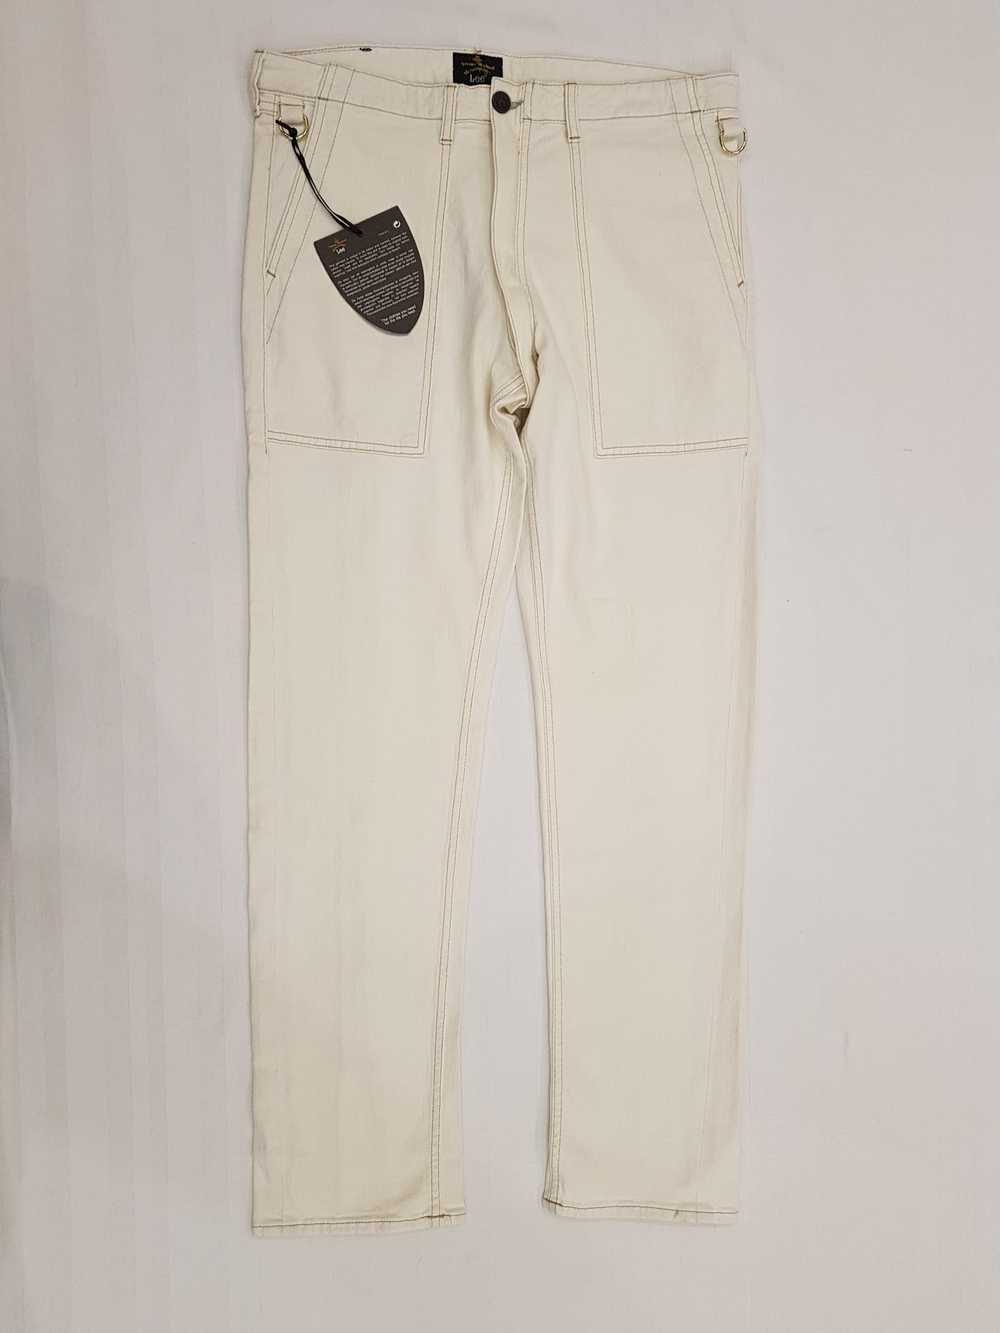 Vivienne Westwood NEW SS11 Cargo Zip Pants x Lee - image 3